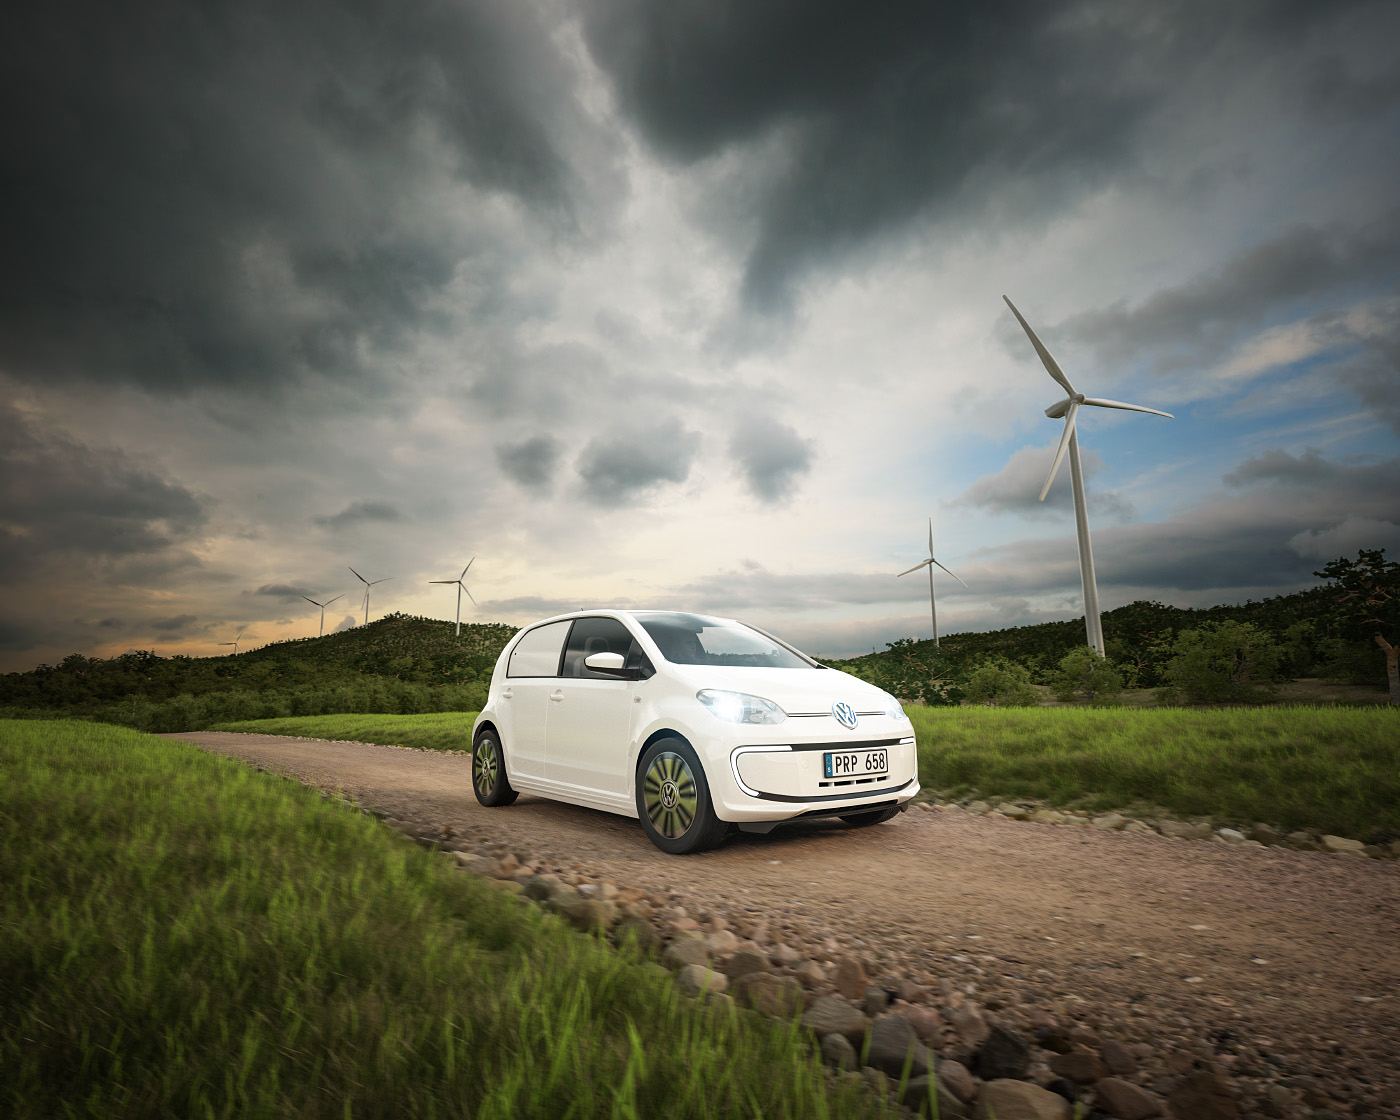 Volkswagen Eloadup pickup special edition wind power electric car at the countryside road drive with battery power. Elbil vindkraft landsväg hybrid 